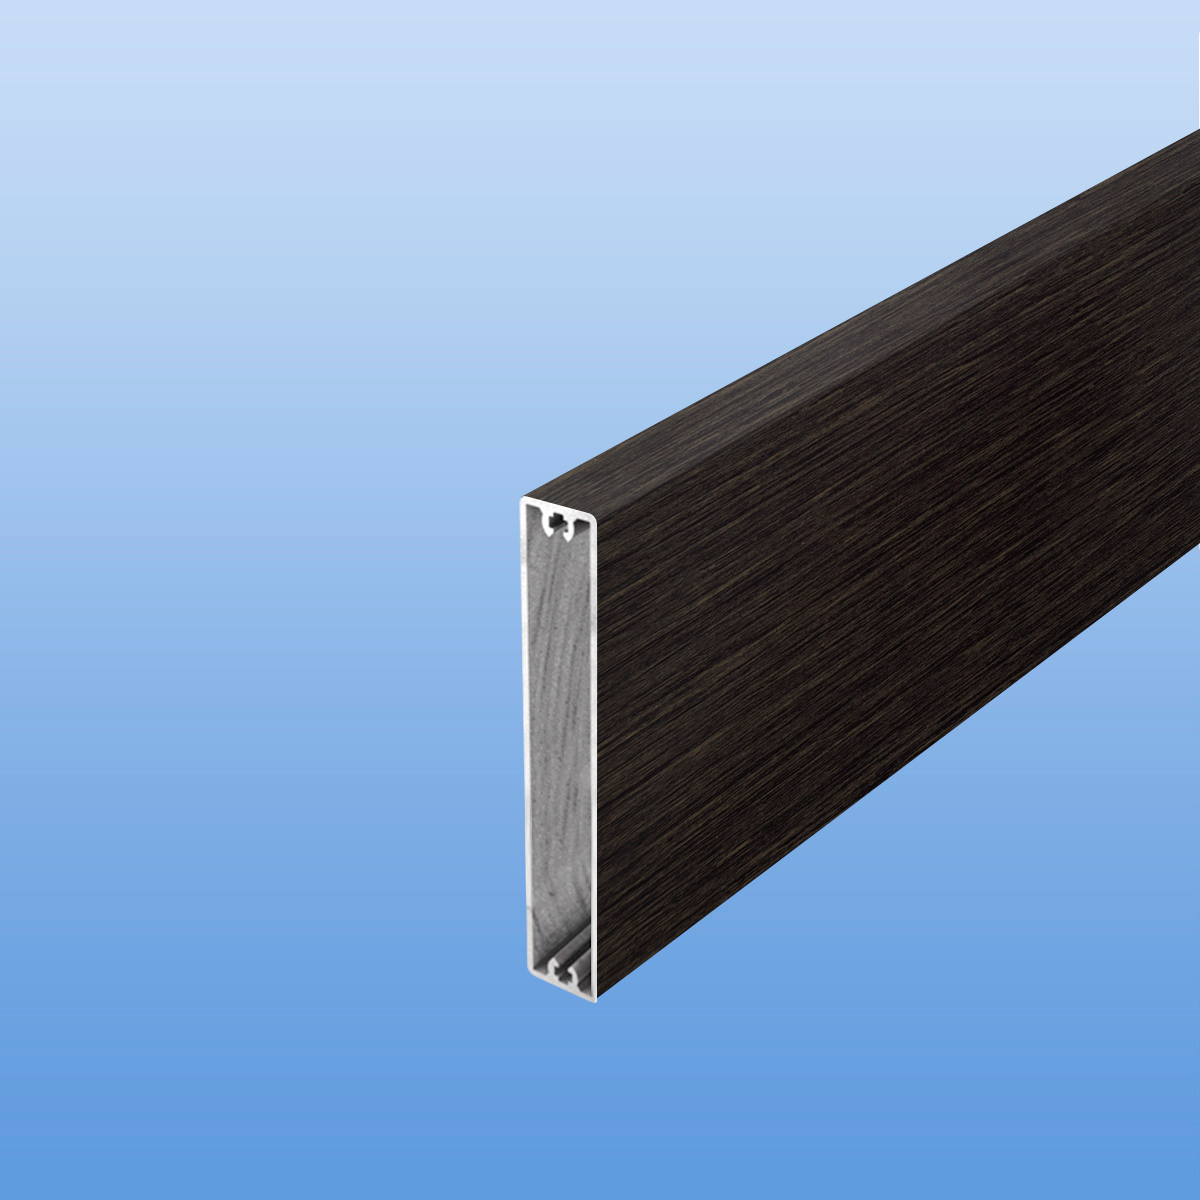 Balkonbretter aus Aluminium 100 mm breit in Holzoptik "Wenge"